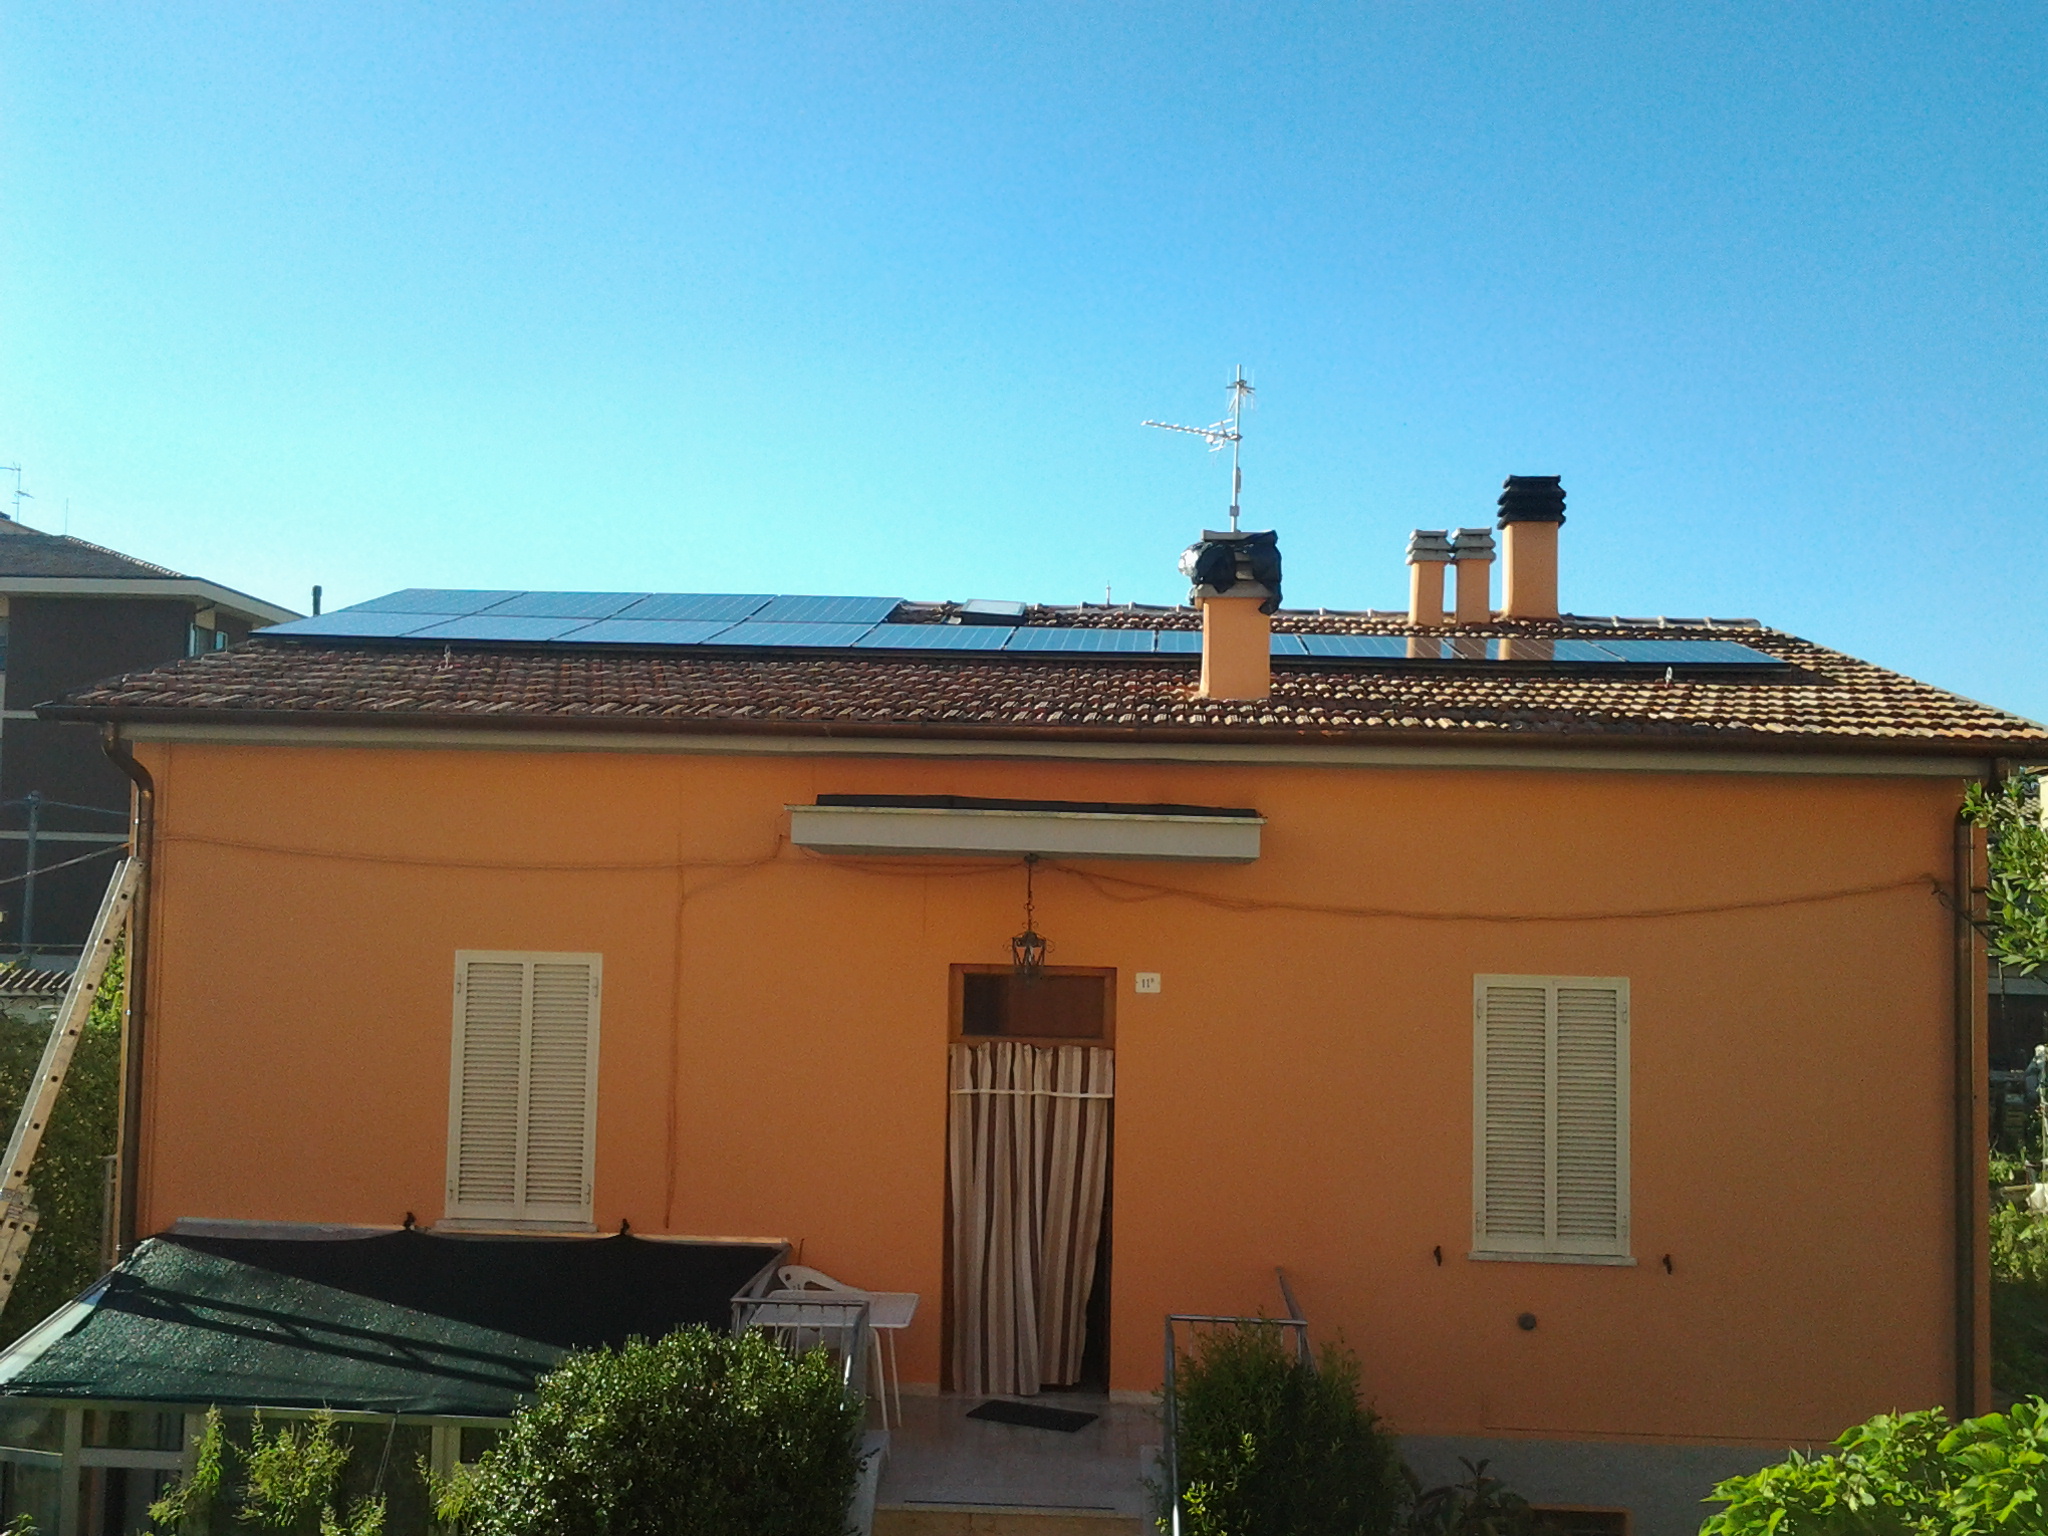 Nuovo impianto Fotovoltaico SunPower-Lightland a Foligno, Perugia, Umbria